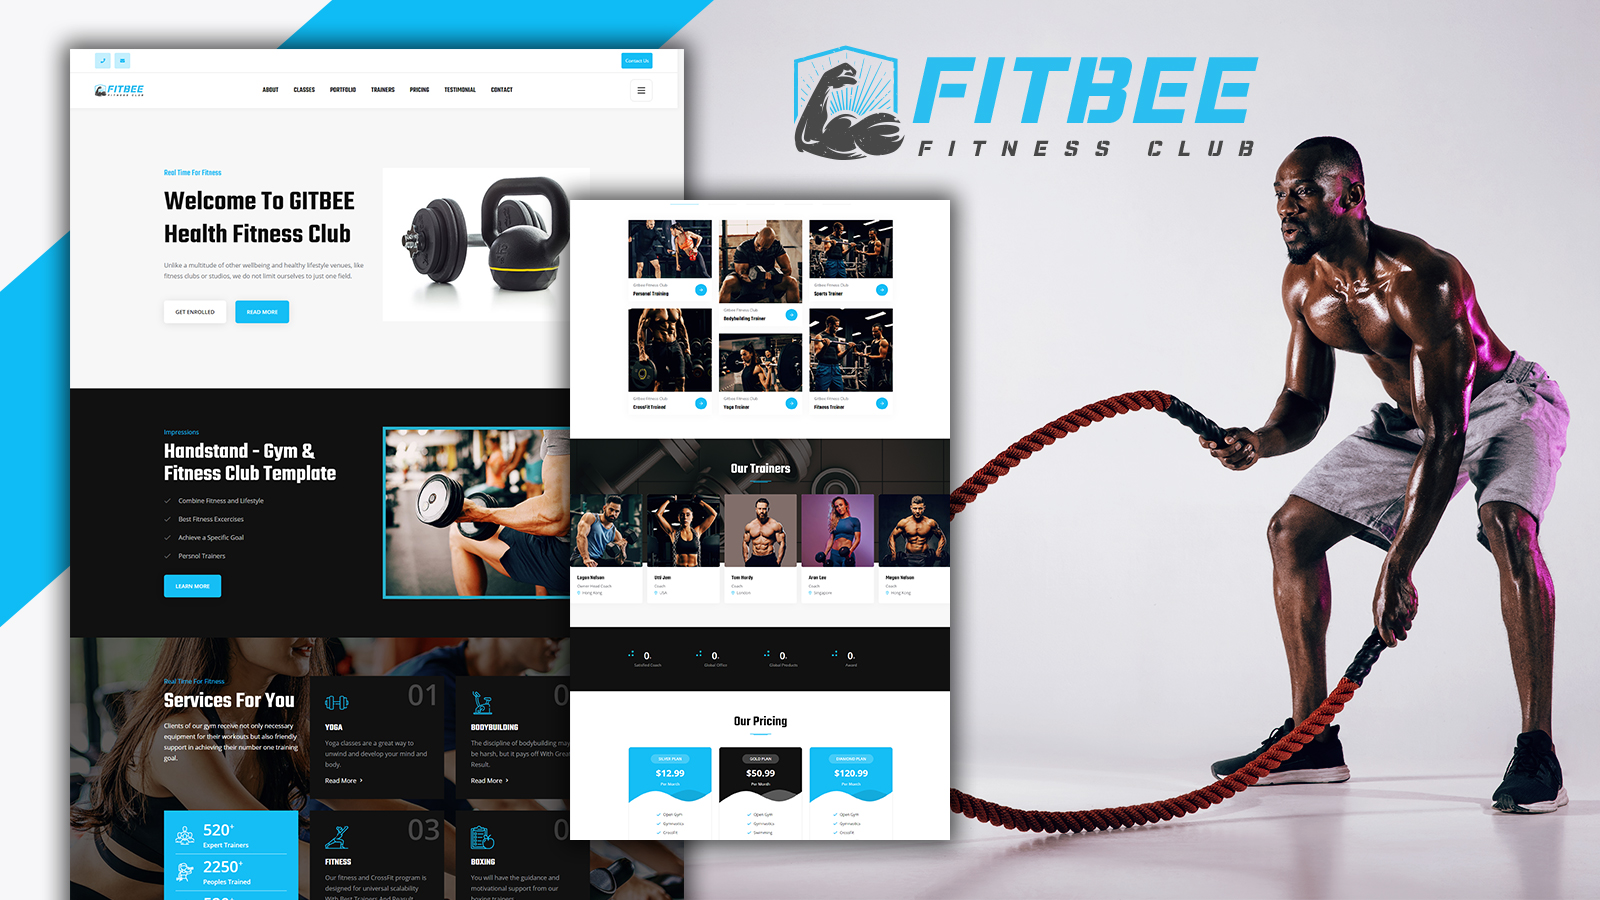 Шаблон Wordpress Jumboo-Fitbee Gym & Sports Theme WordPress